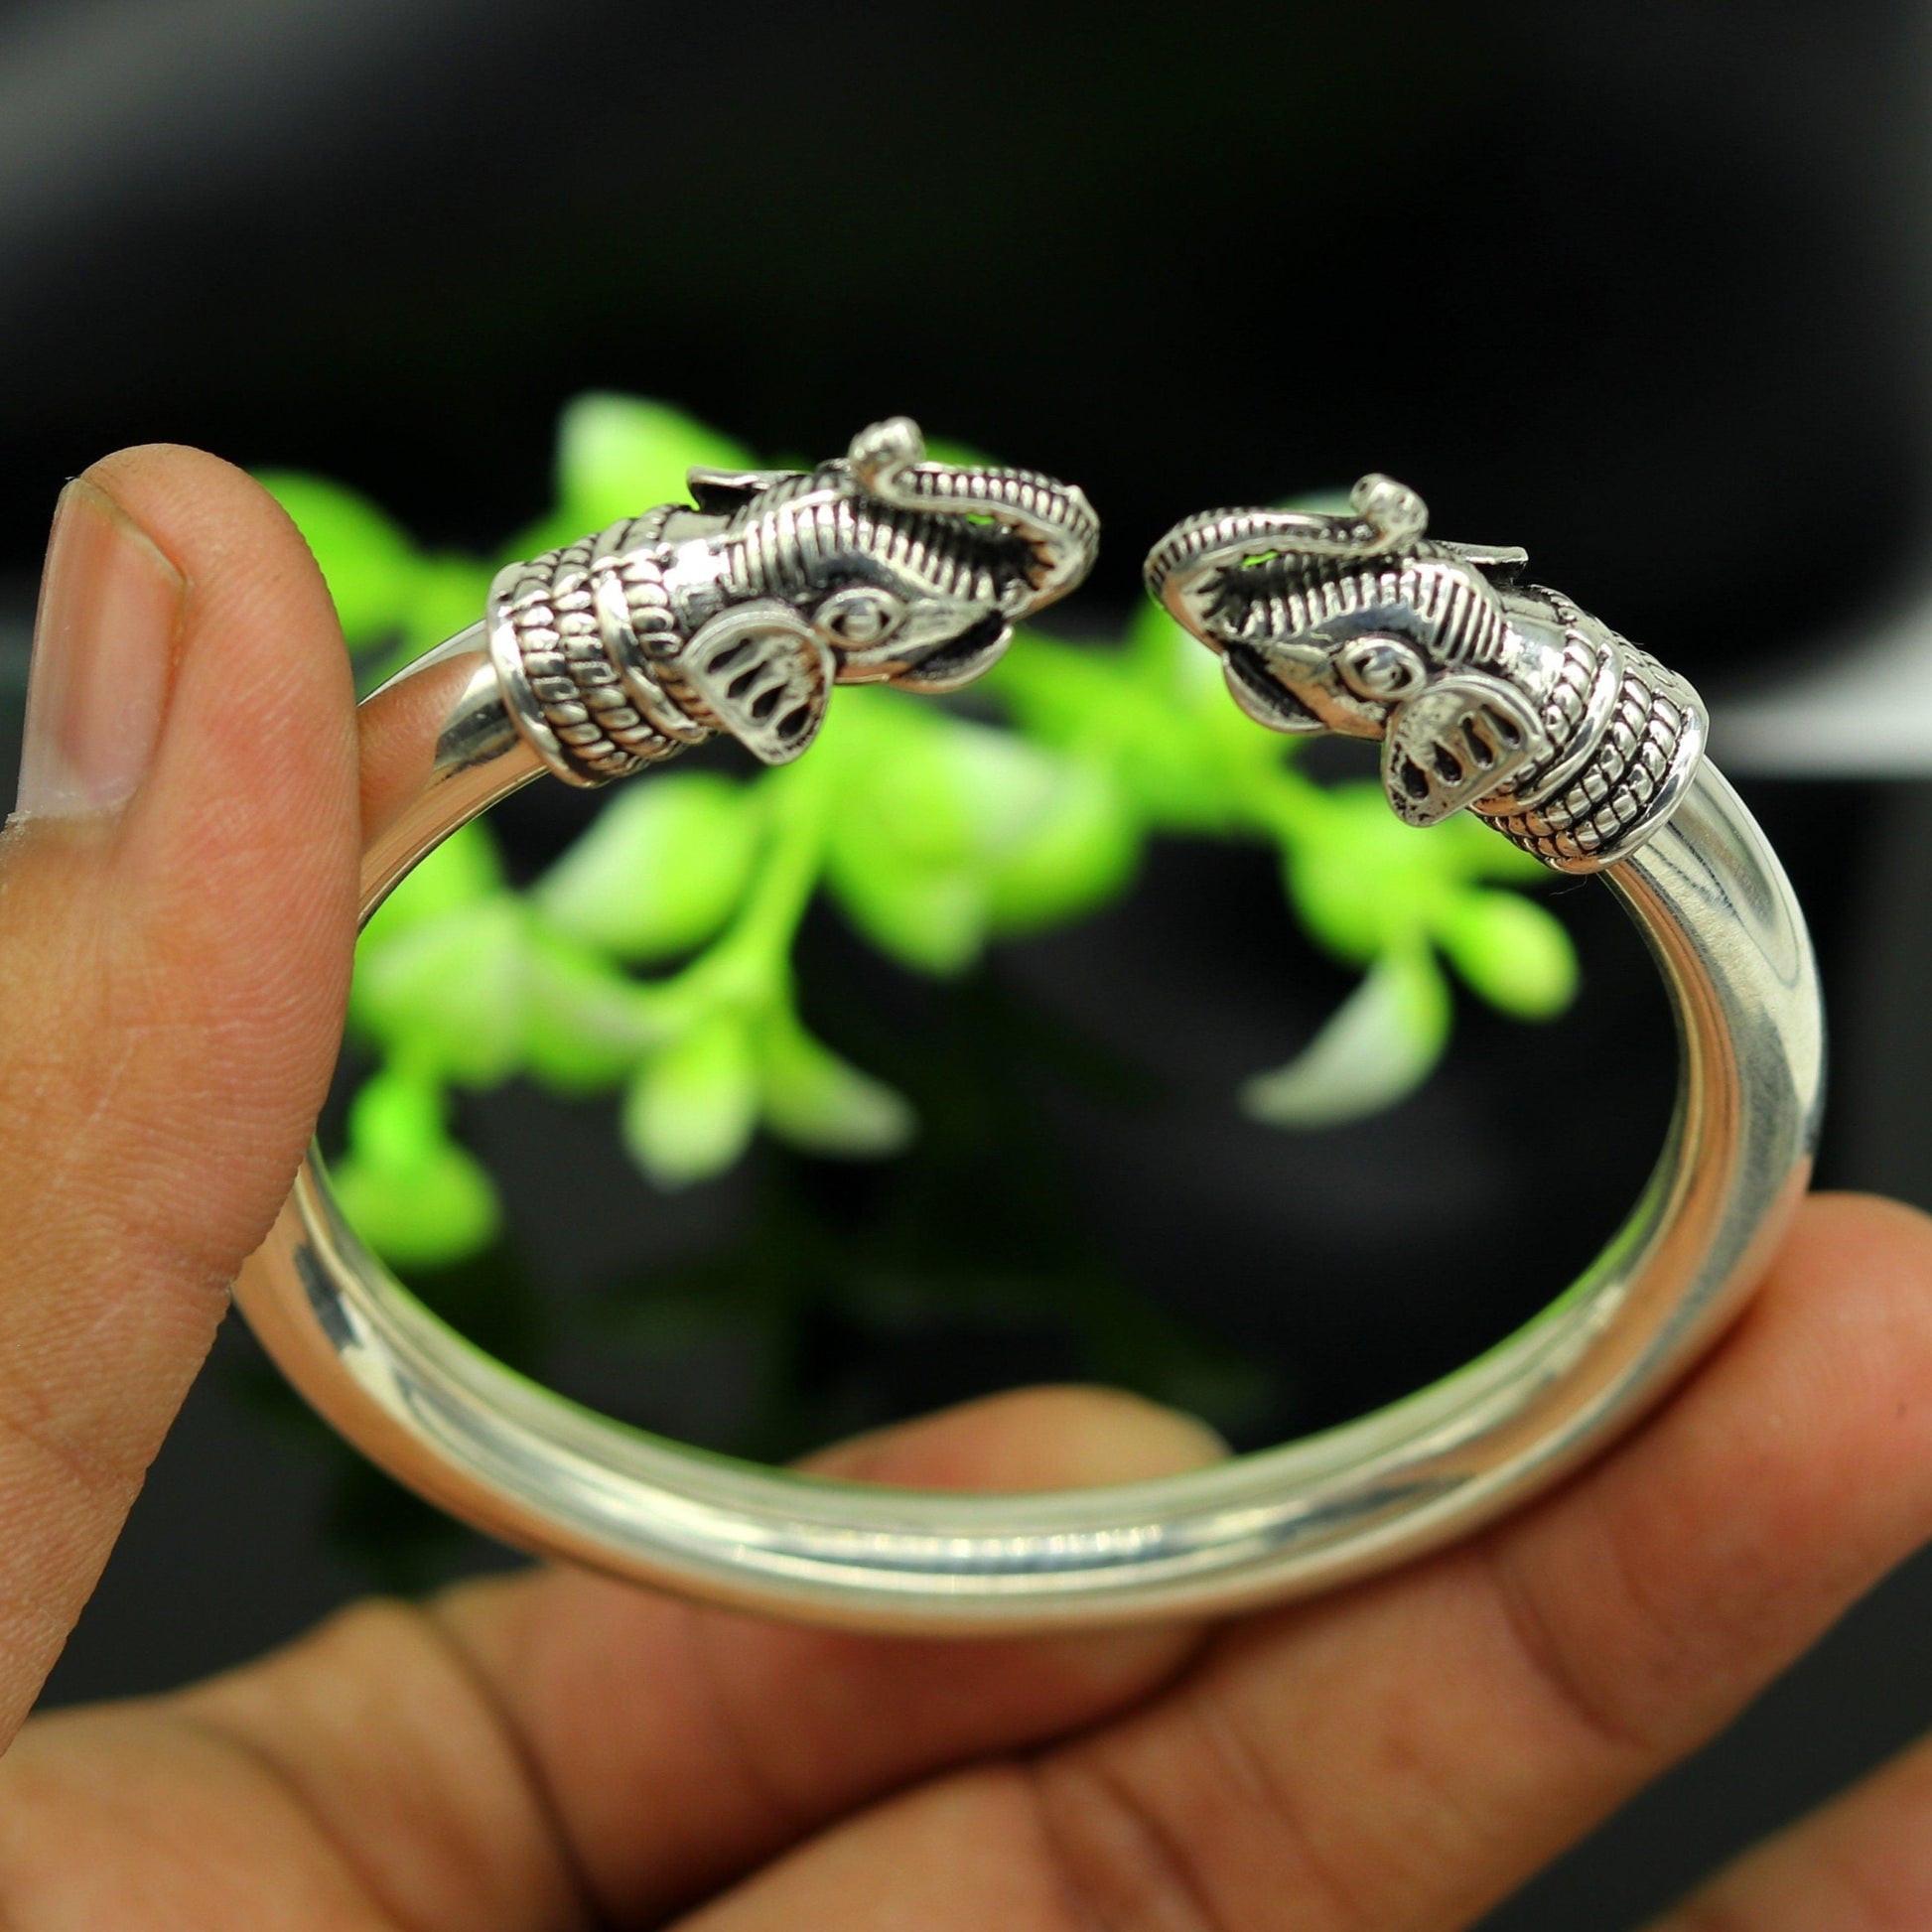 925 sterling silver handmade Plain shiny elephant design bangle bracelet kada, fabulous unisex gifting personalized jewelry nsk386 - TRIBAL ORNAMENTS